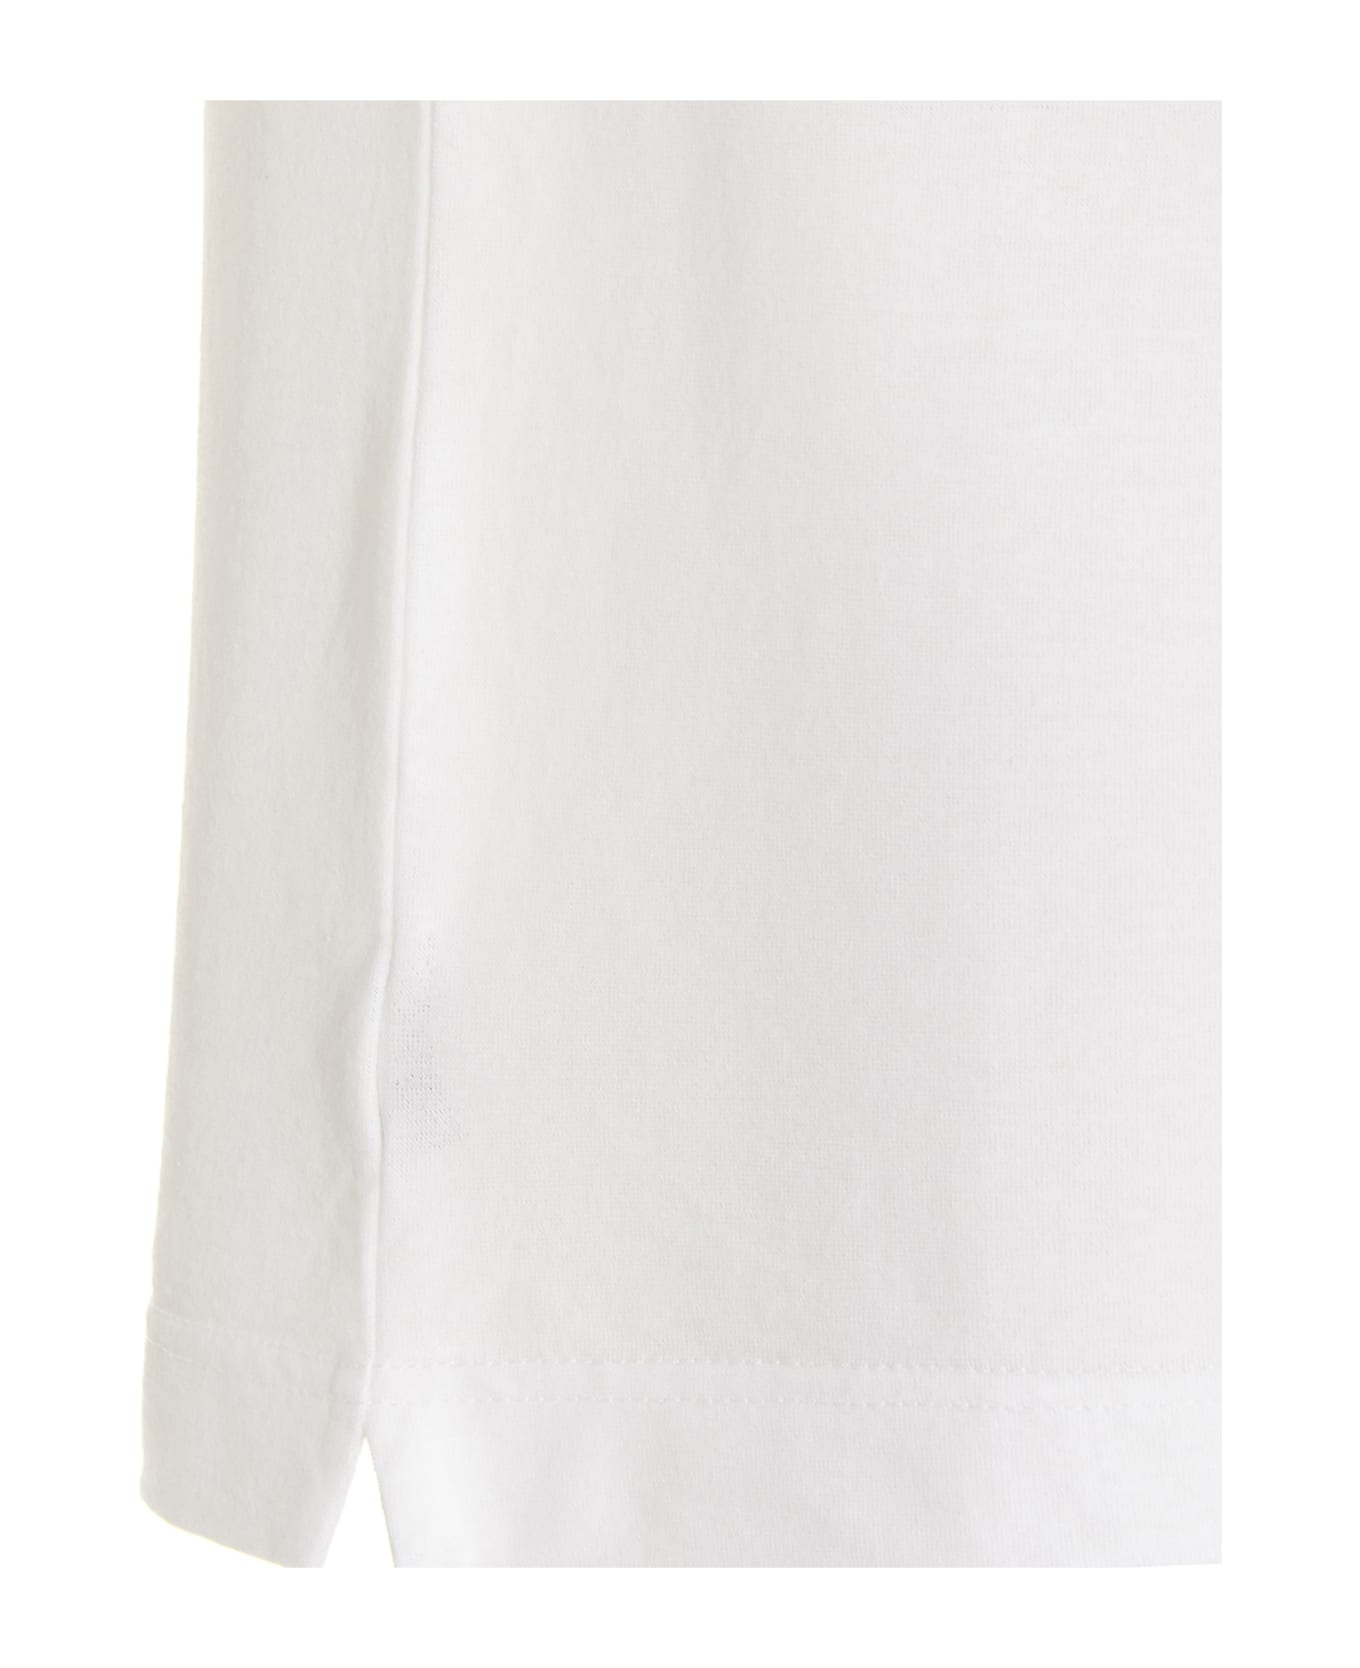 Zanone Ice Cotton Polo Shirt - Bianco